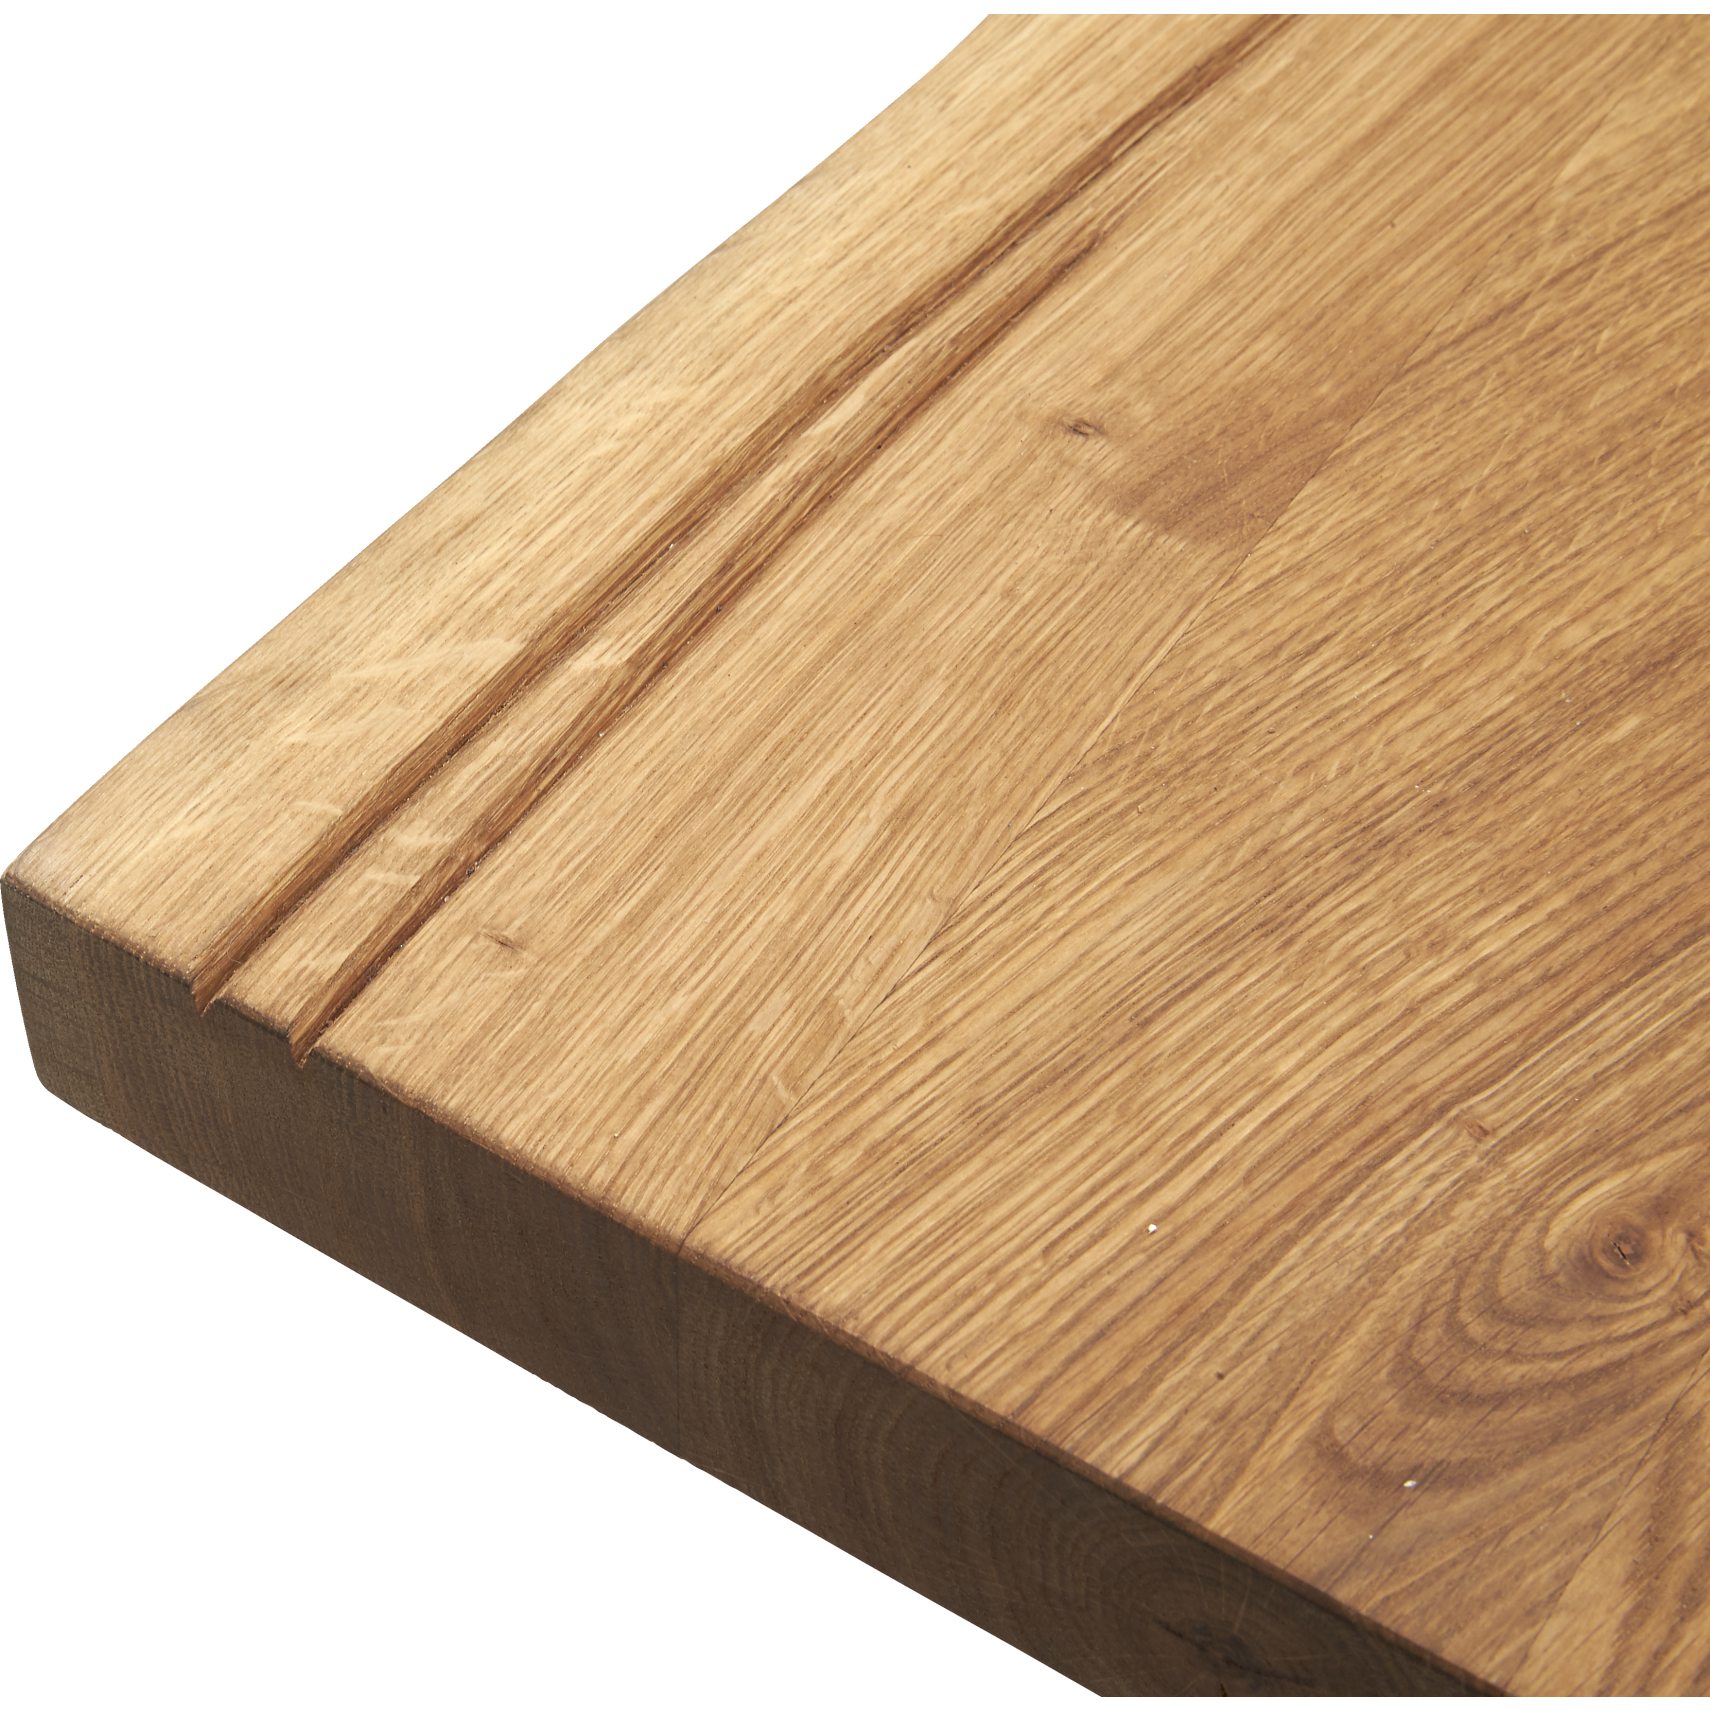 Timber 240 x 100 x 75 cm Spisebord 